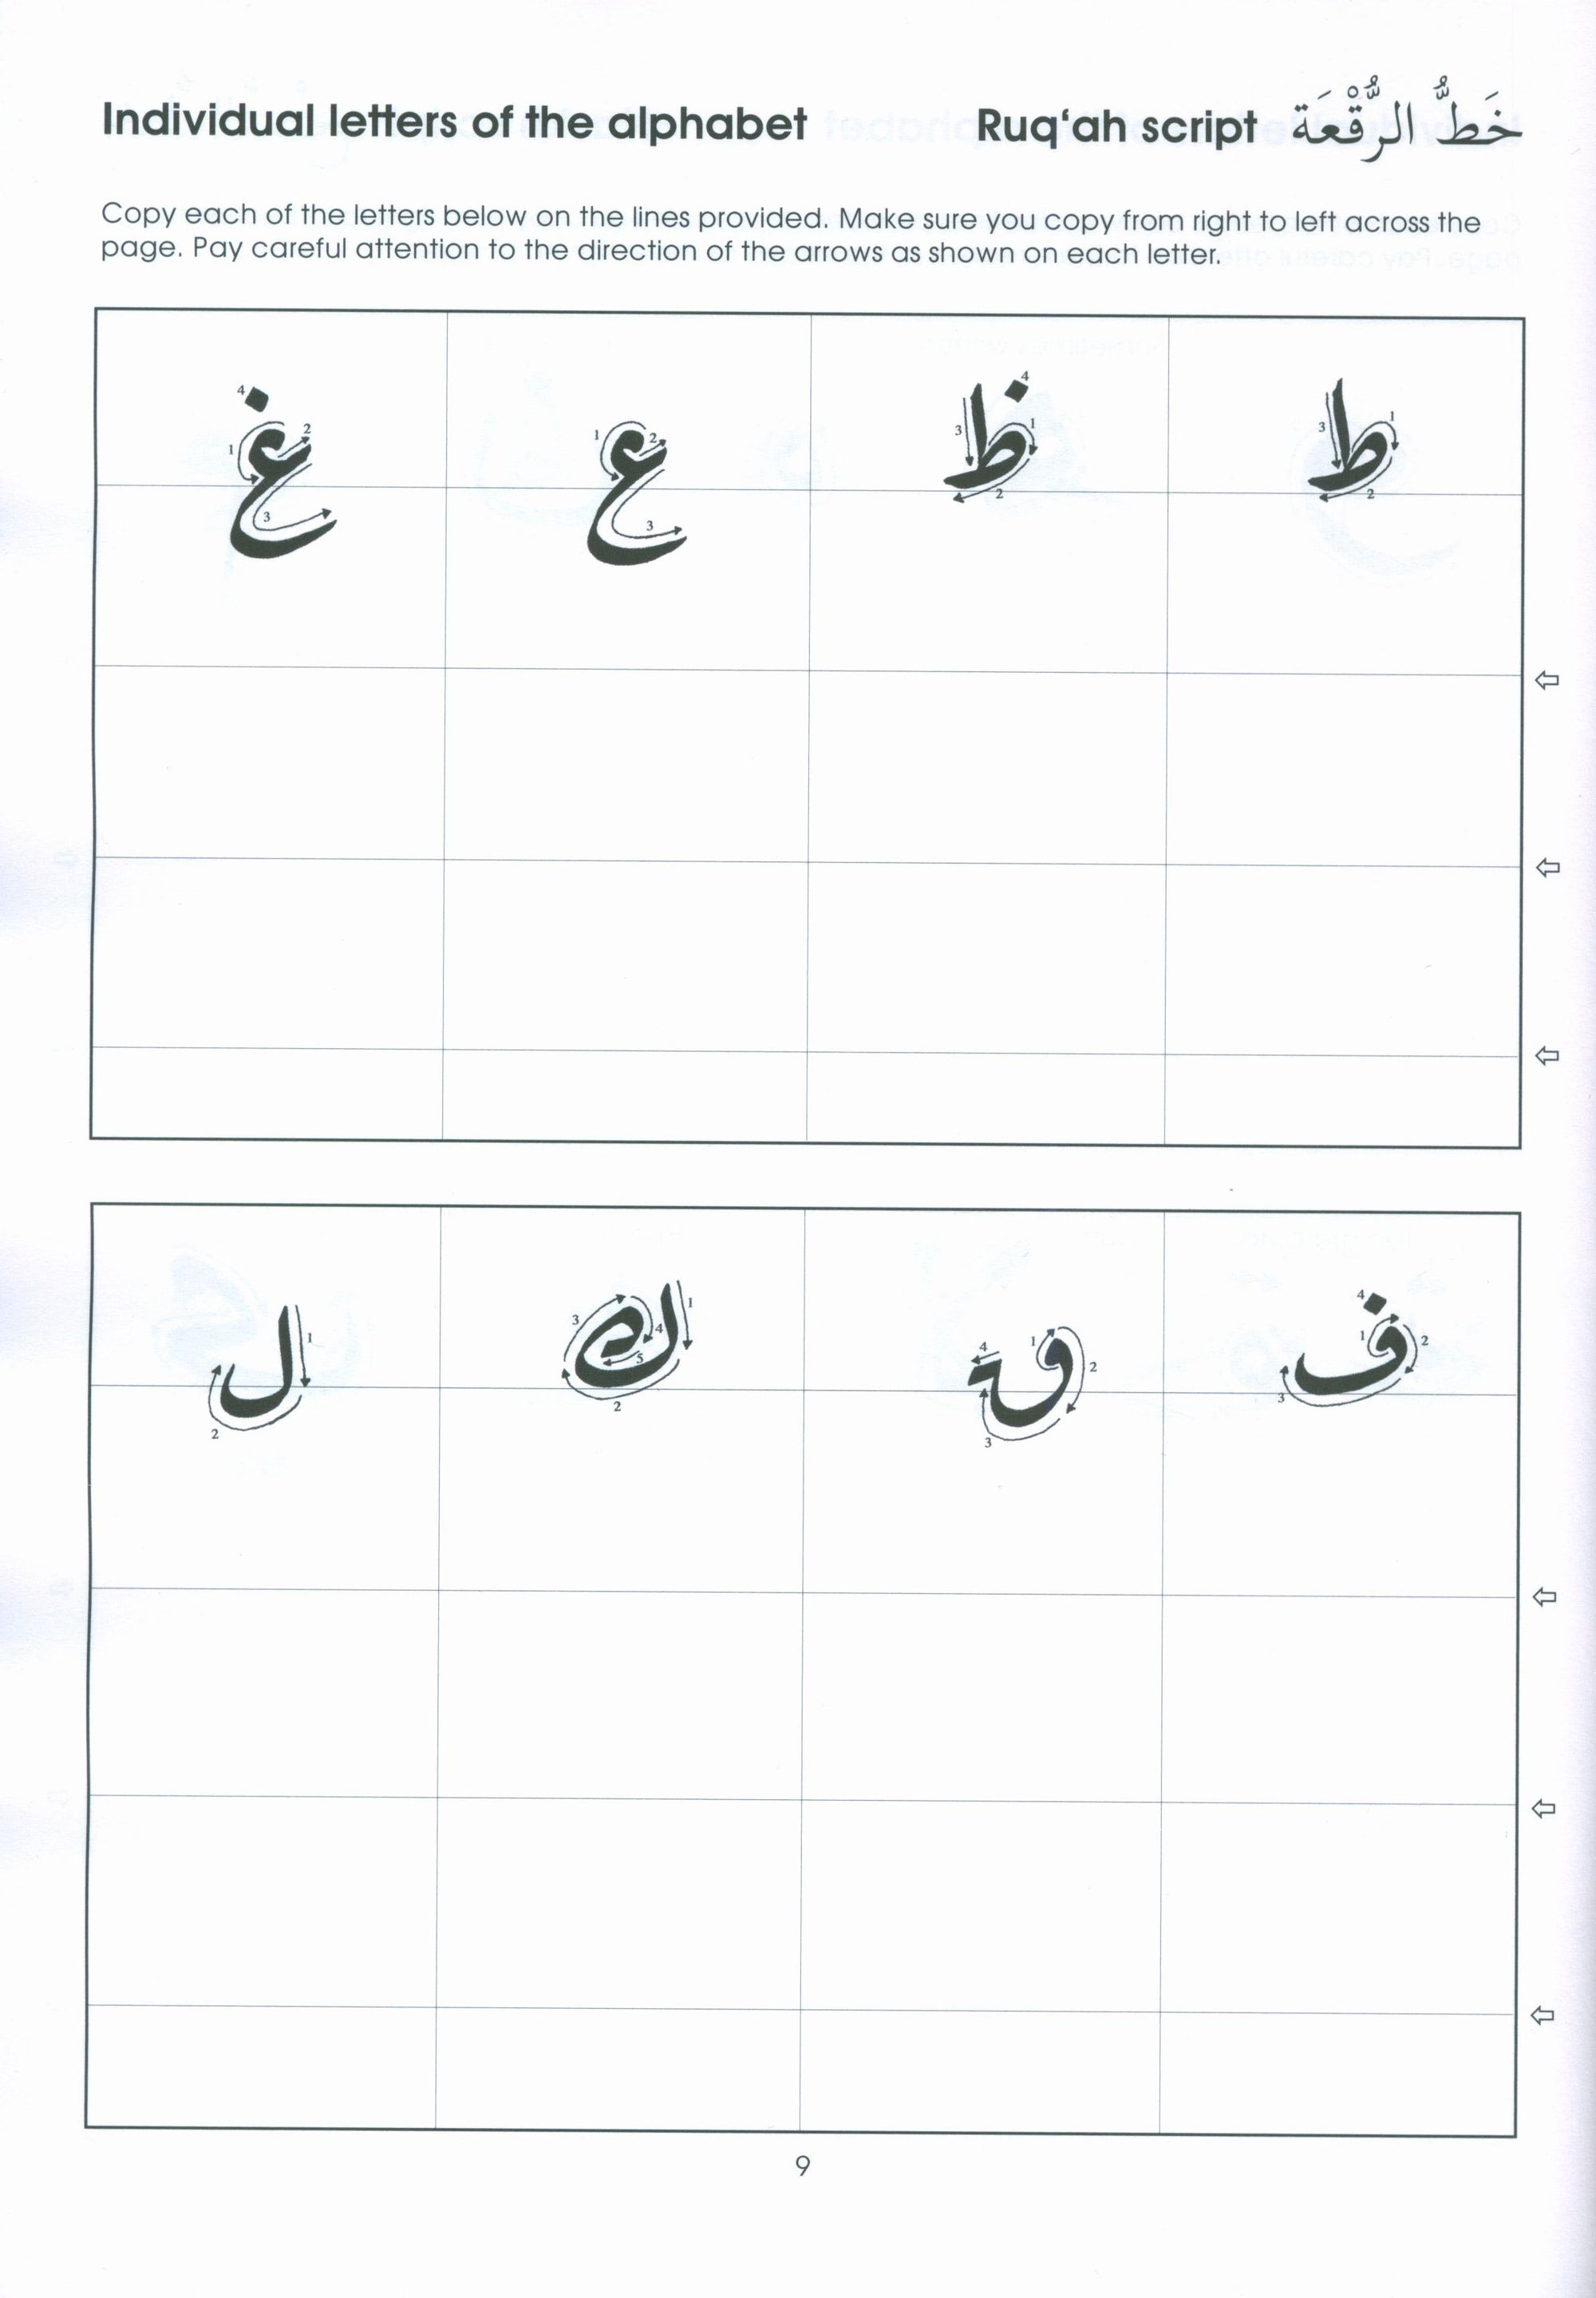 Gateway to Arabic Handwriting Book مفتاح العربية